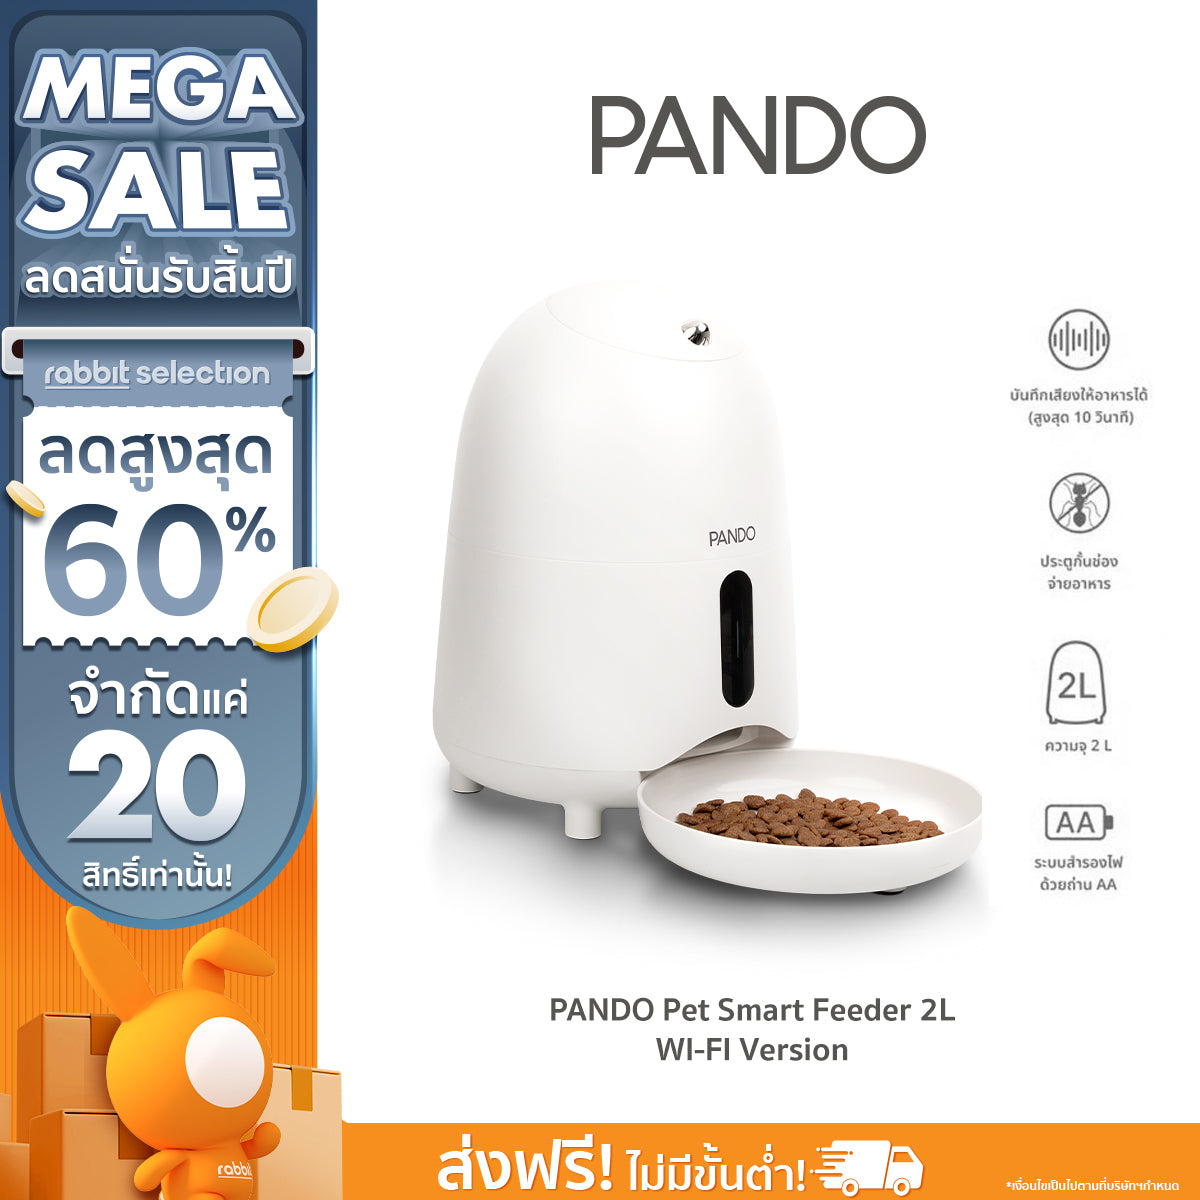 PANDO Pet Smart Feeder 2L - Wi-Fi Version